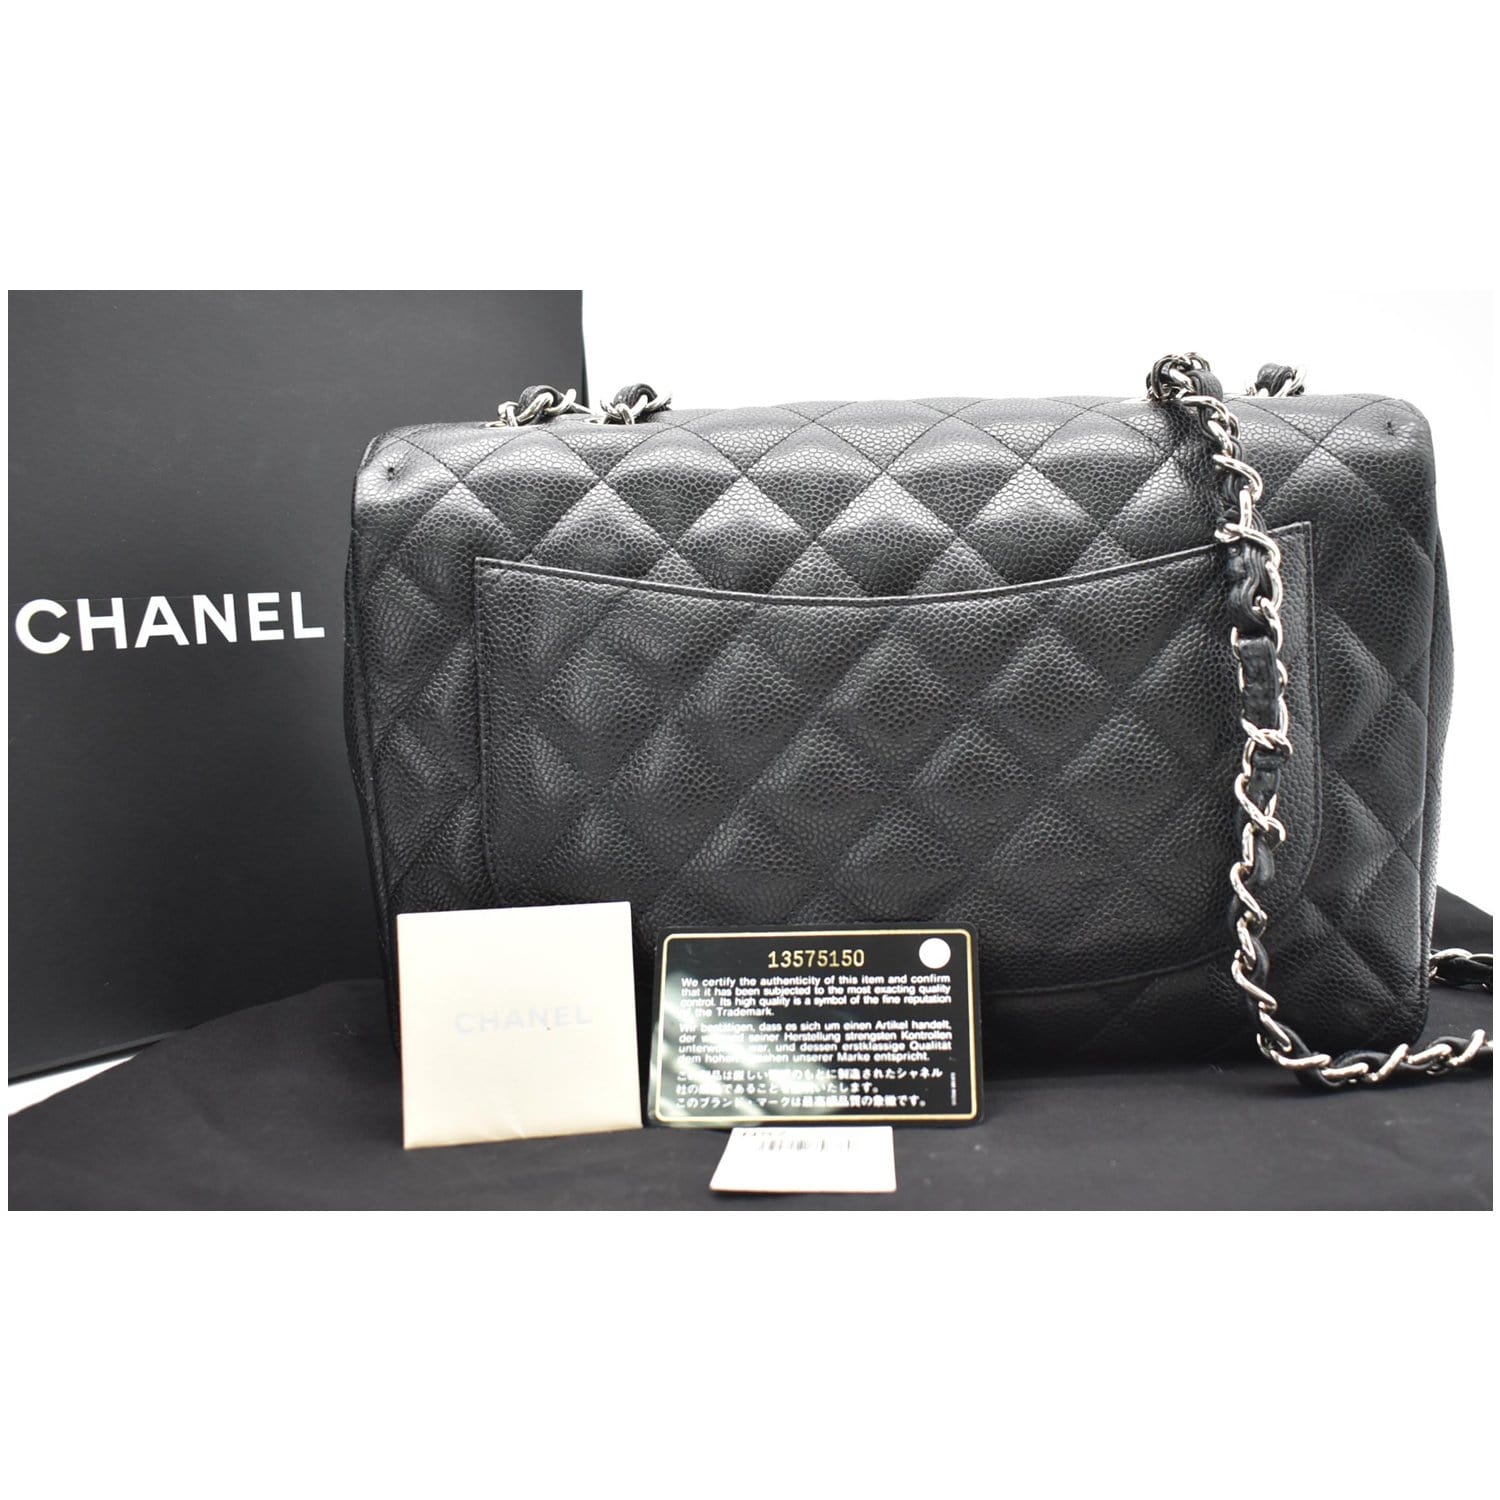 Chanel classic jumbo single flap bag caviar leather with gold